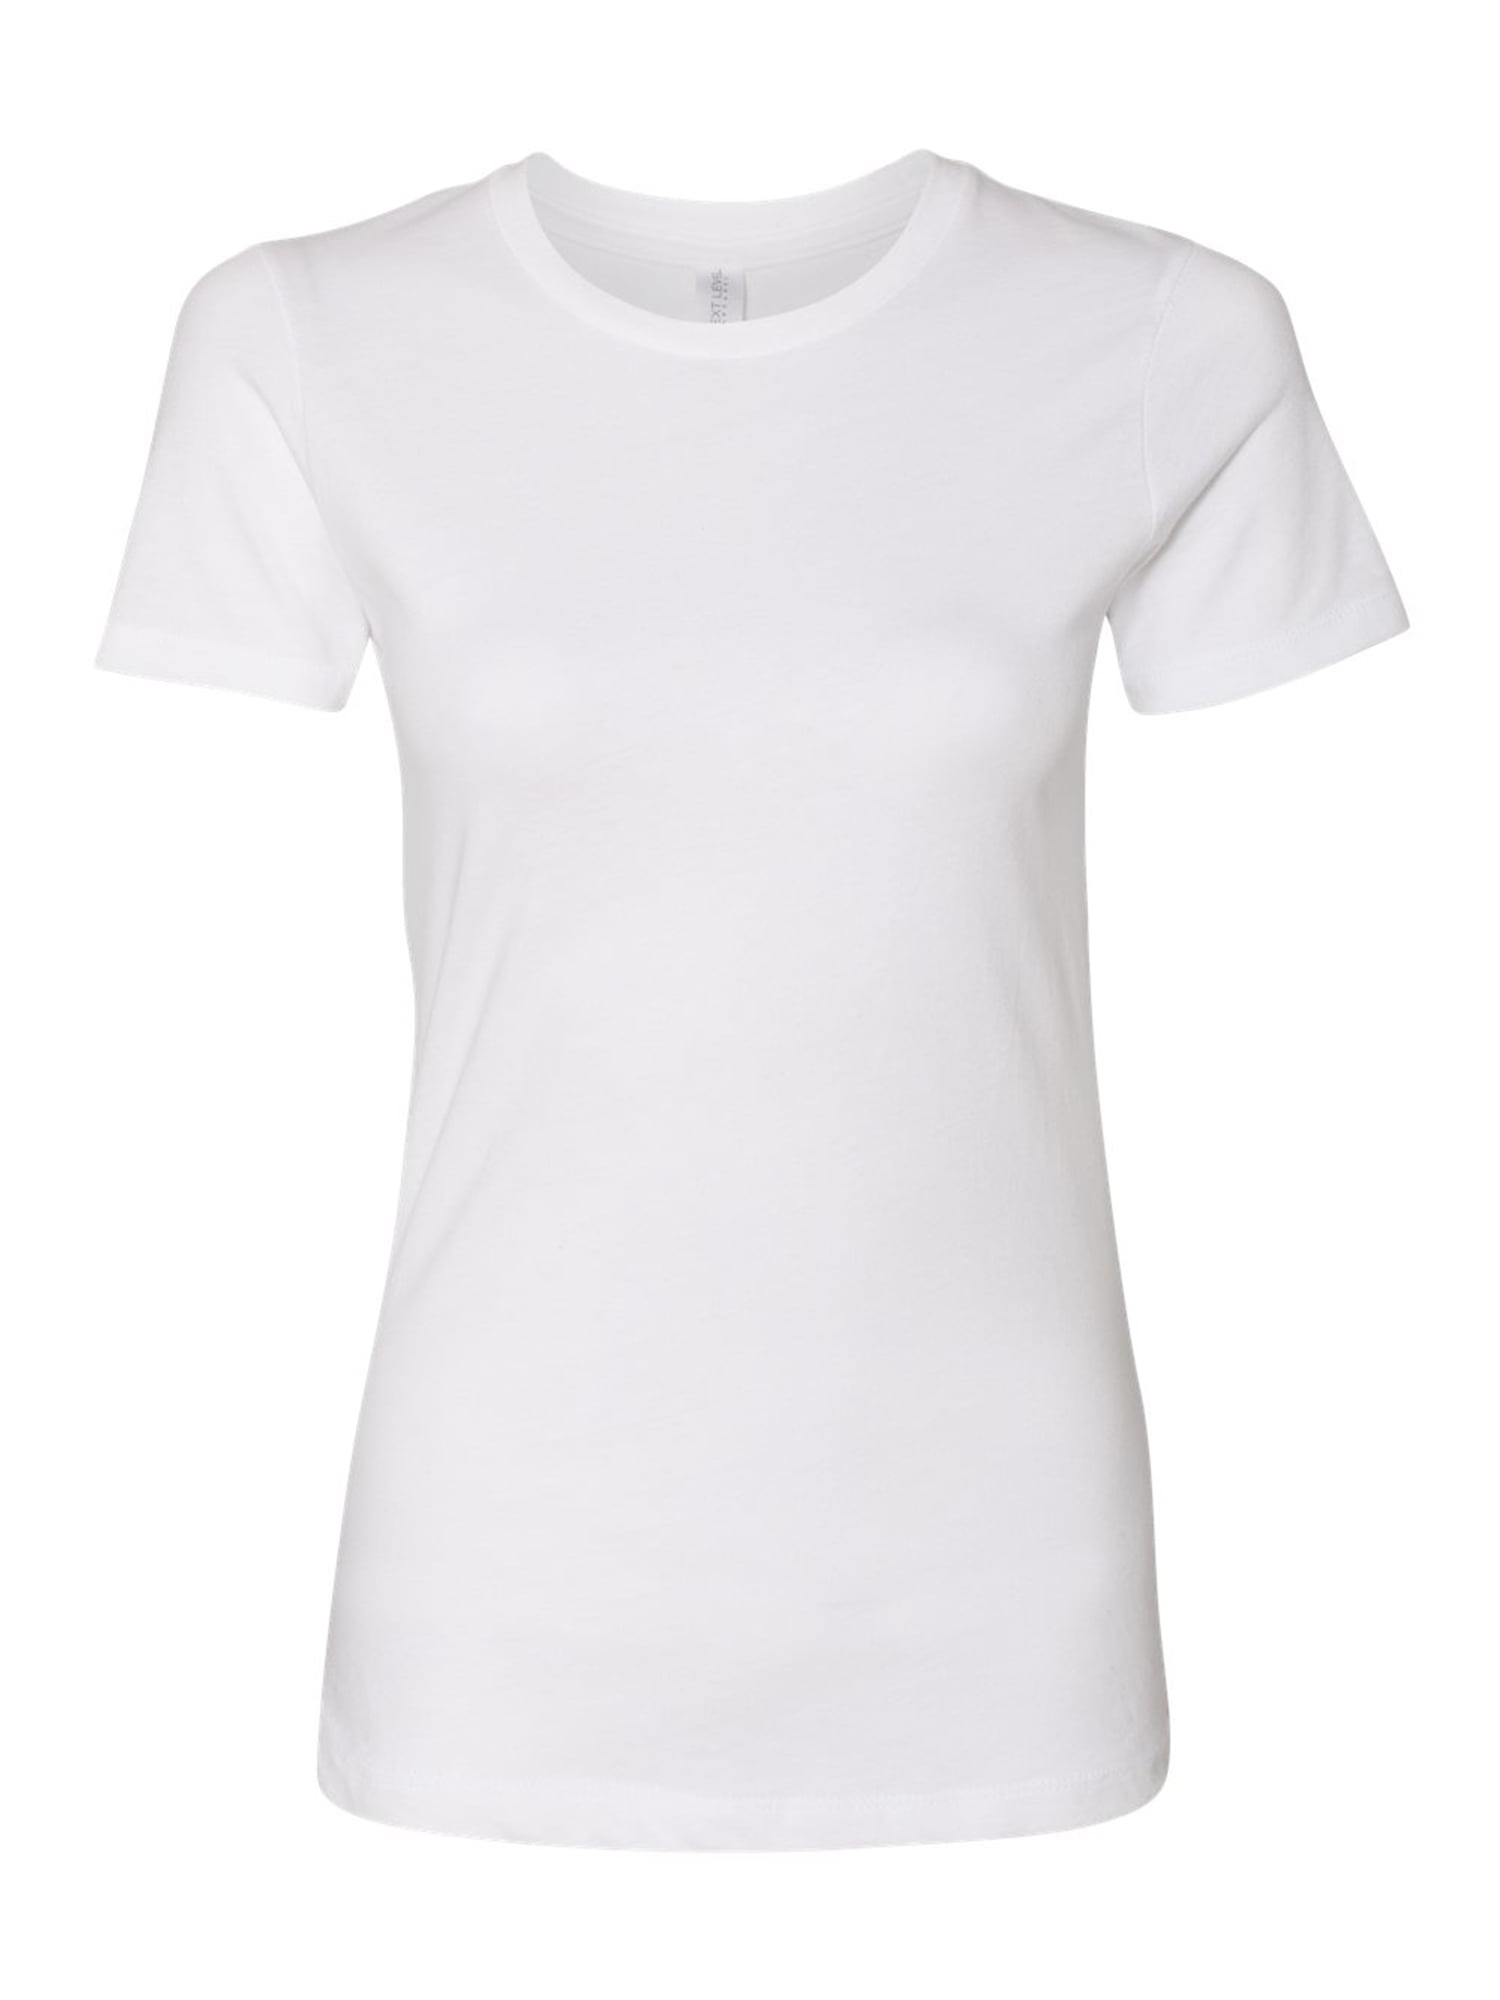 Next Level - Basic T Shirt for Women - Women Short Sleeve Shirts